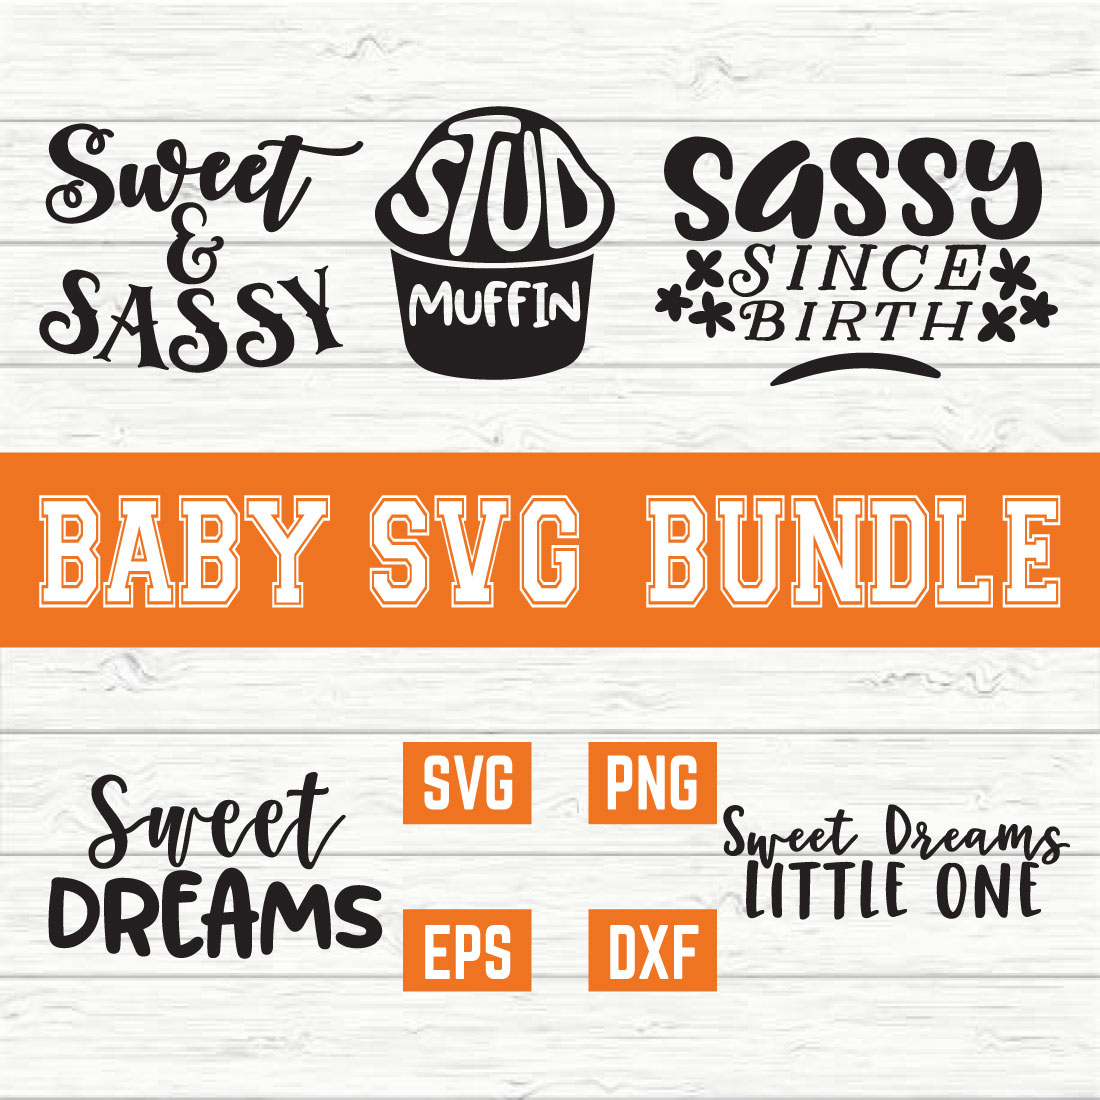 Baby Svg Bundle vol 14 preview image.